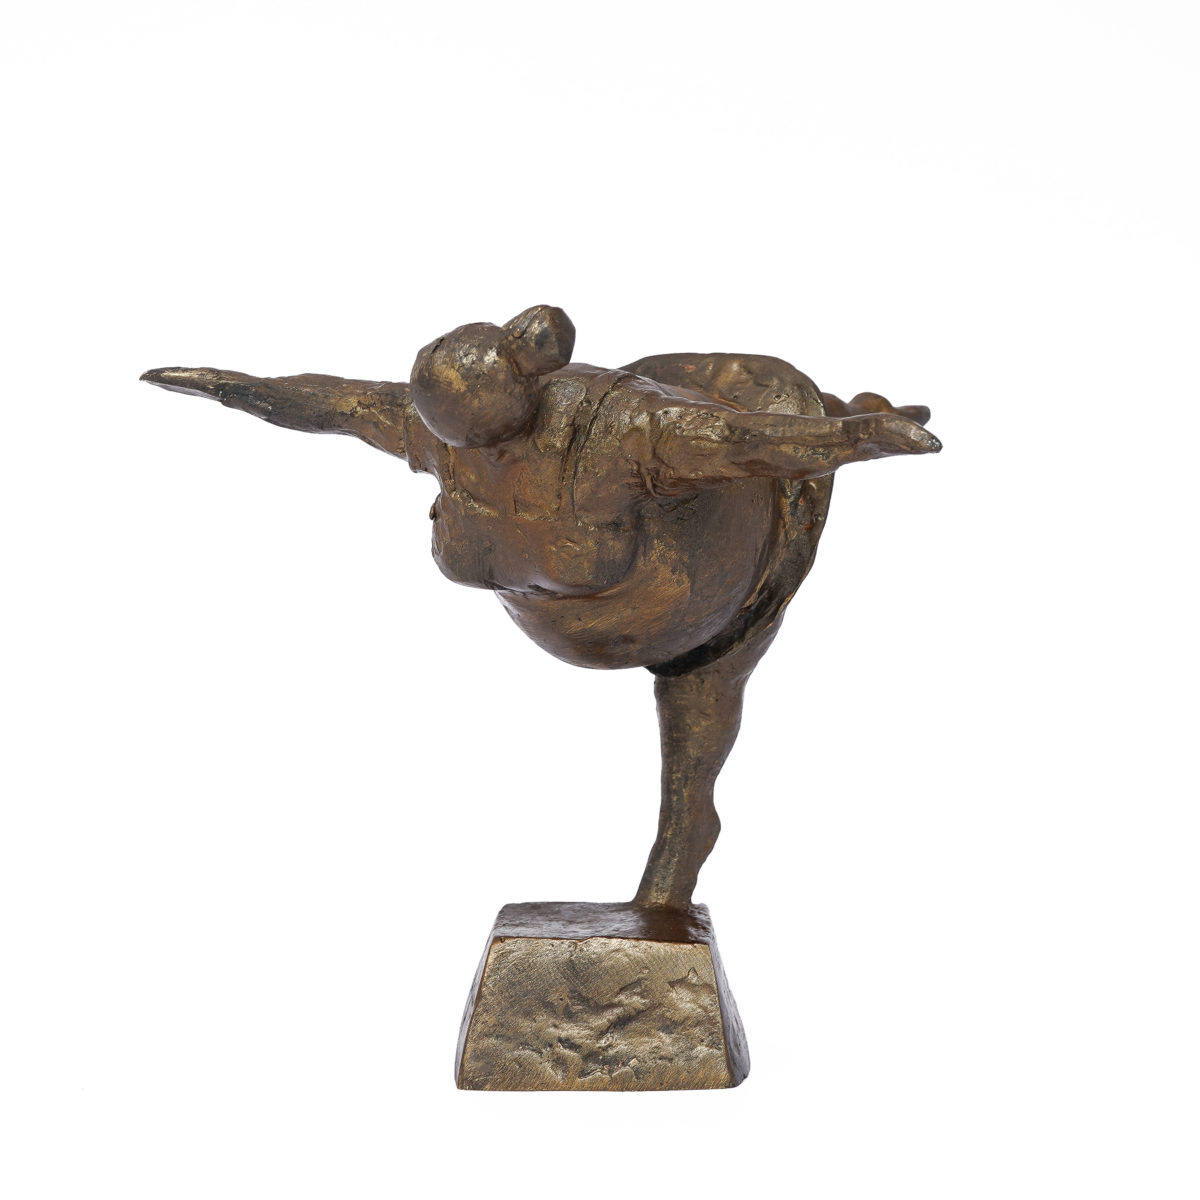 Chubby woman dancing in bronze